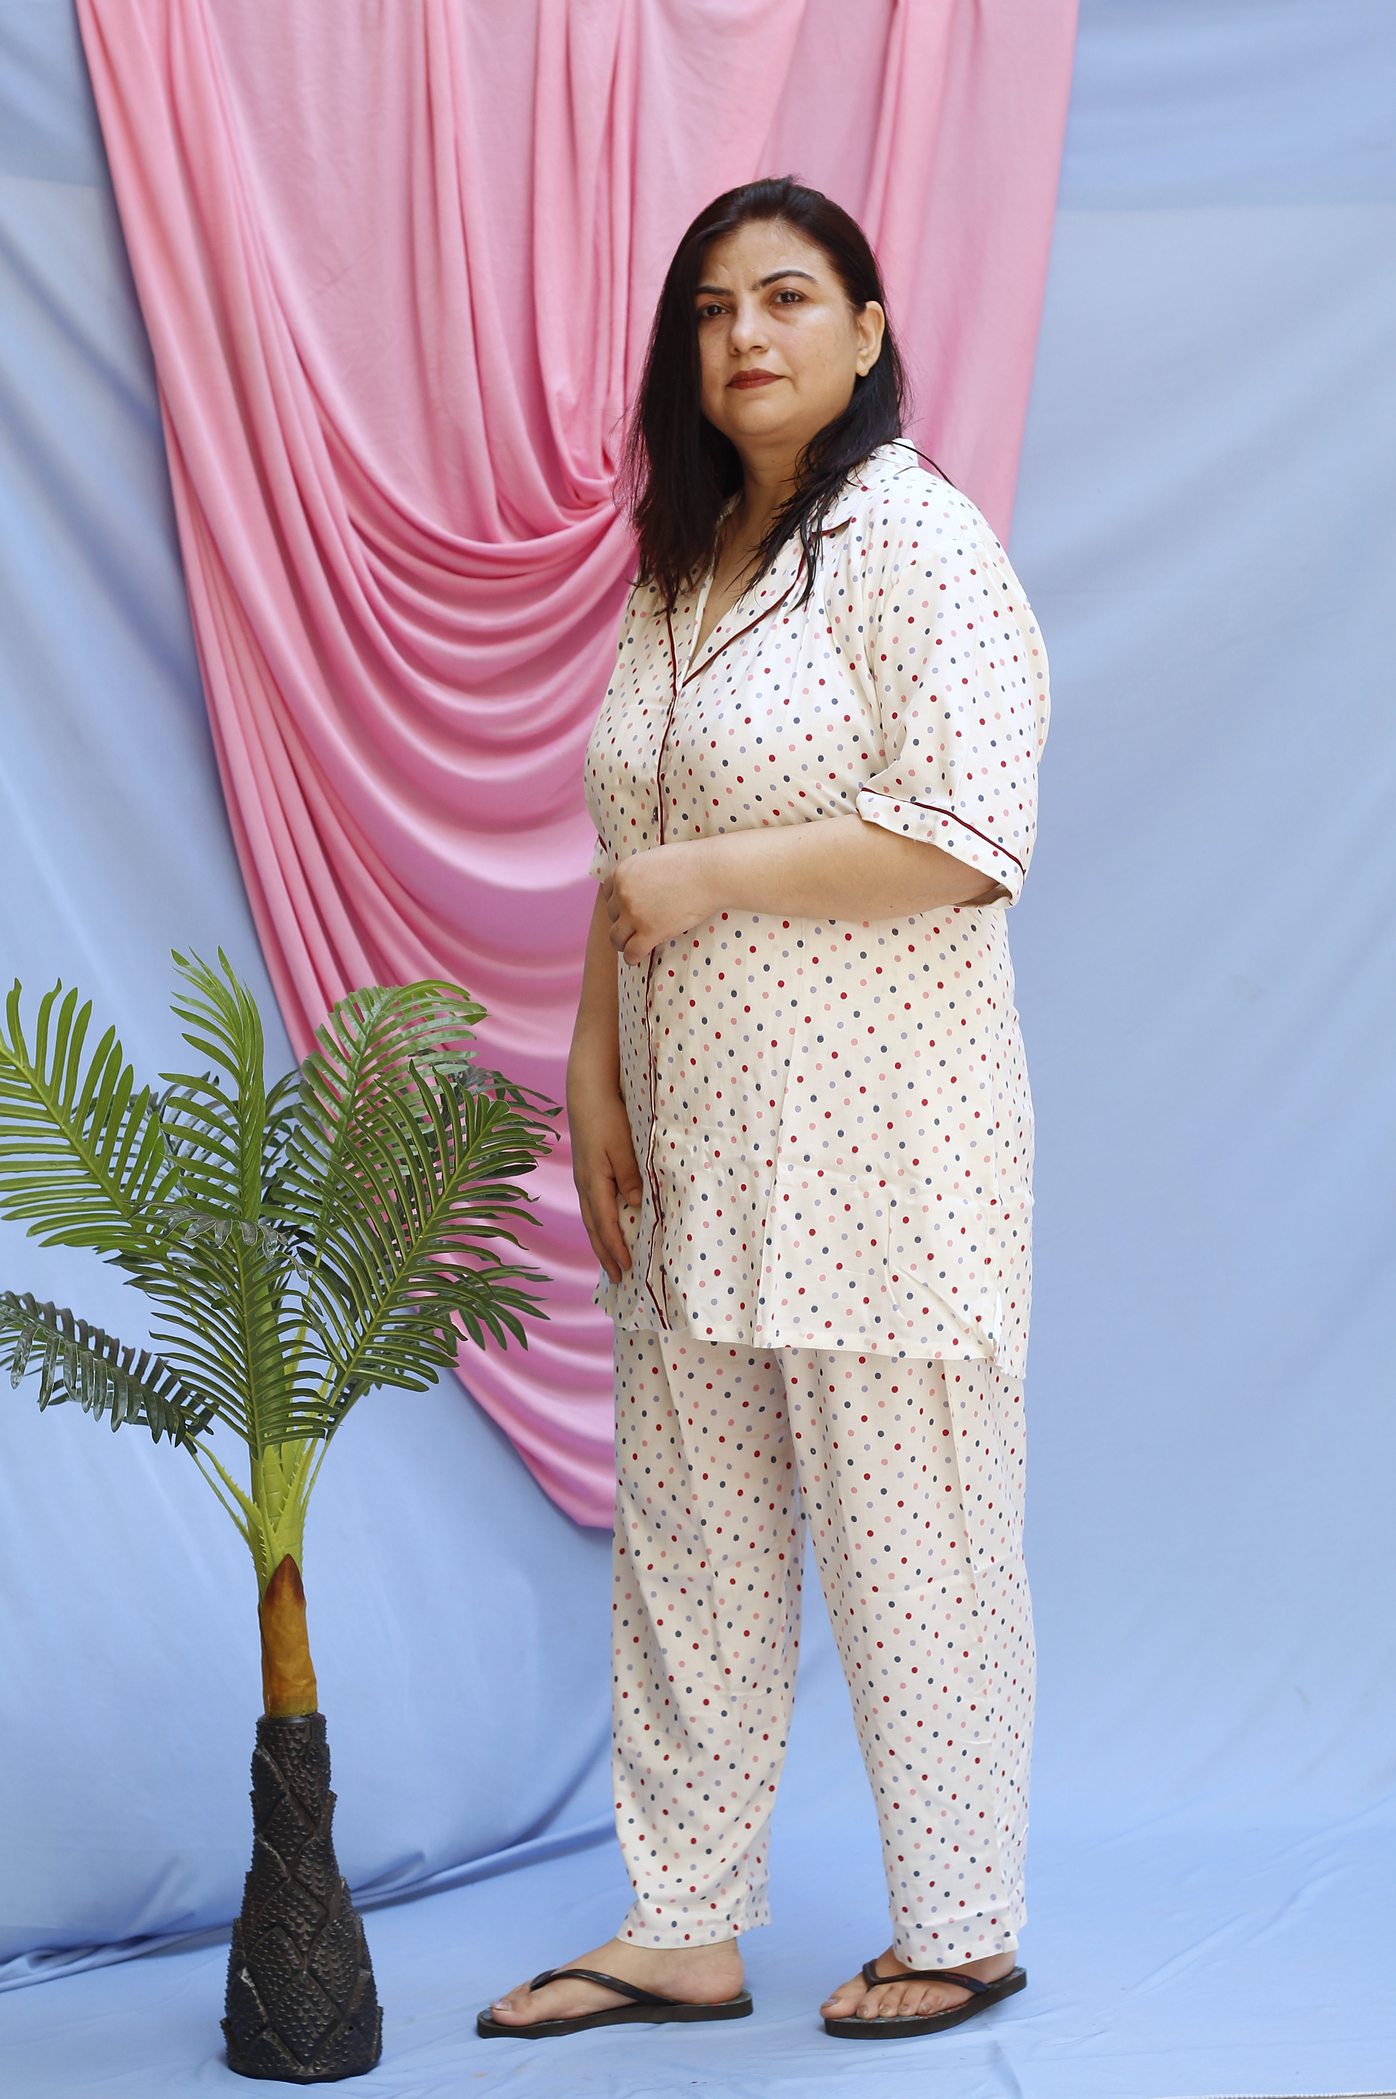 Lastinch Women's Plus Size White Patiala Salwar, White, 58 price